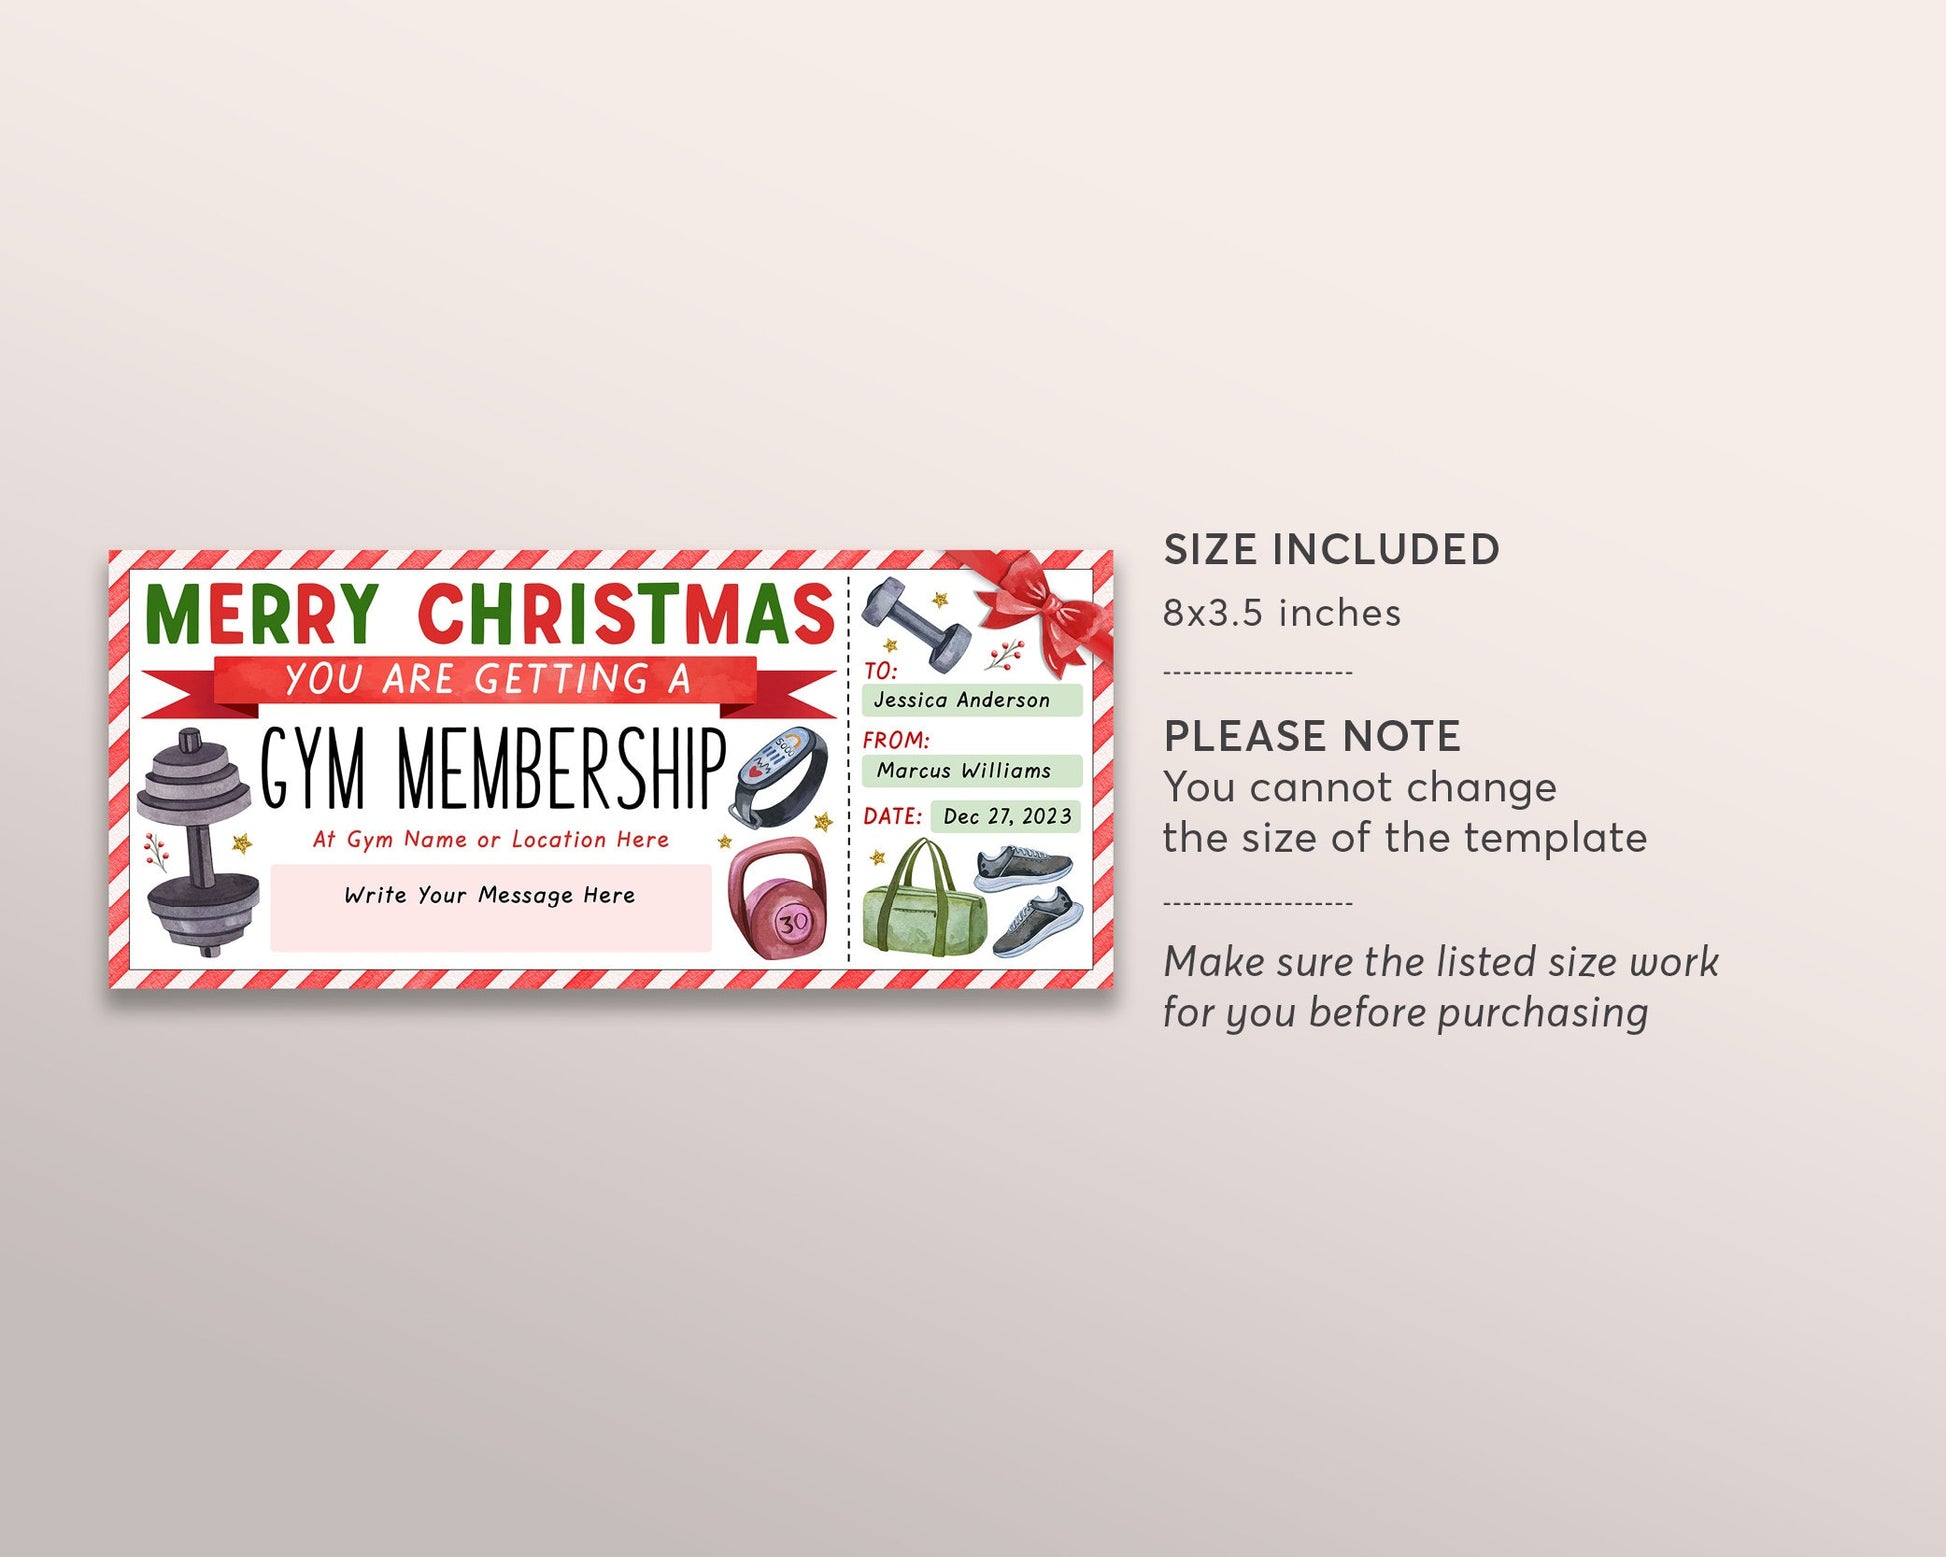 Editable Gym Membership Card Templates